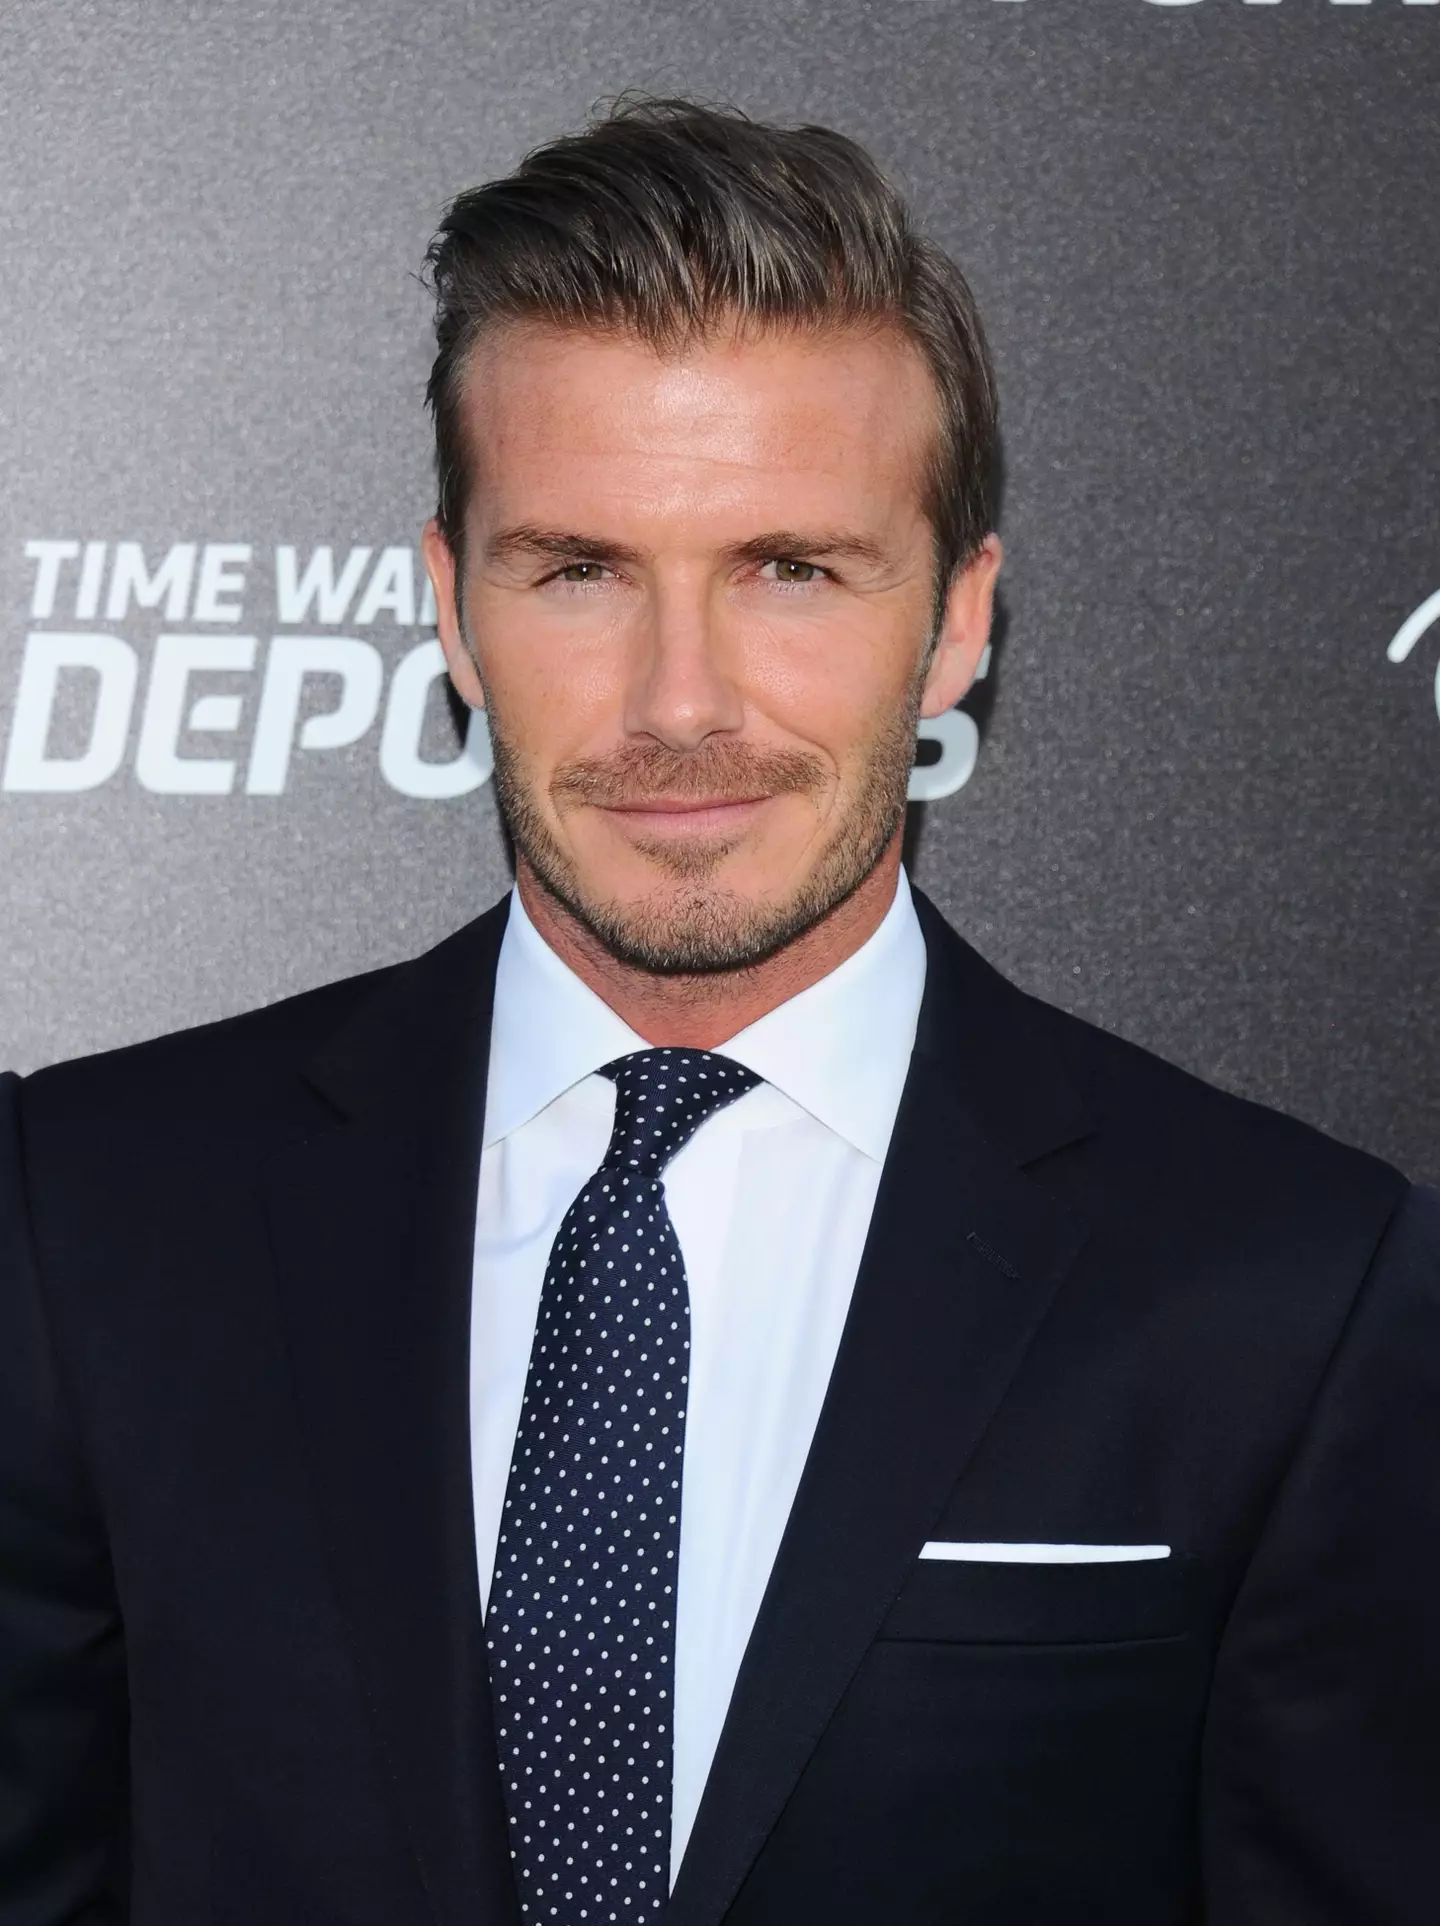 David Beckham has bought his son Brooklyn a $500,000 (£383,502) car following his eldest child’s wedding to Nicola Peltz on Saturday.